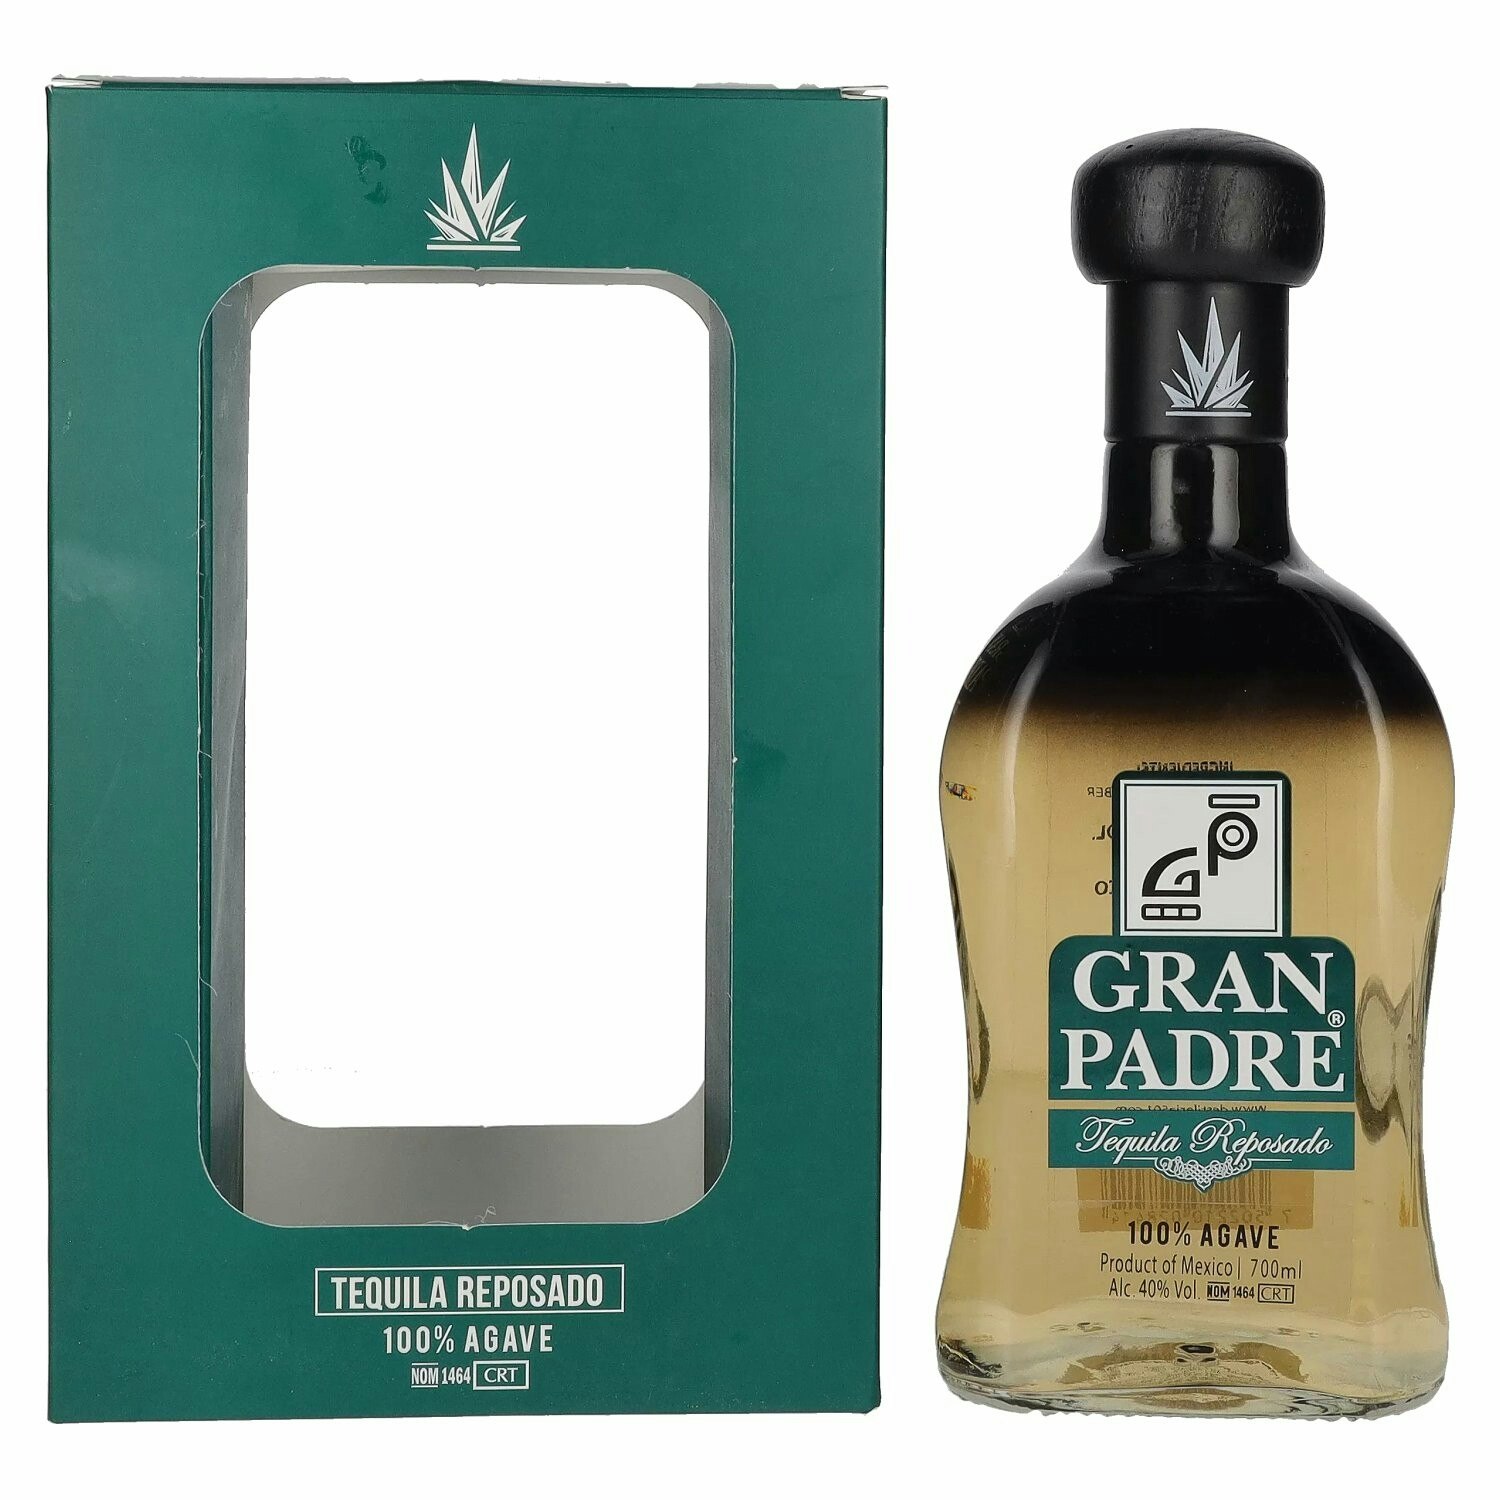 Gran Padre Tequila Reposado 100% Agave 40% Vol. 0,7l in Giftbox